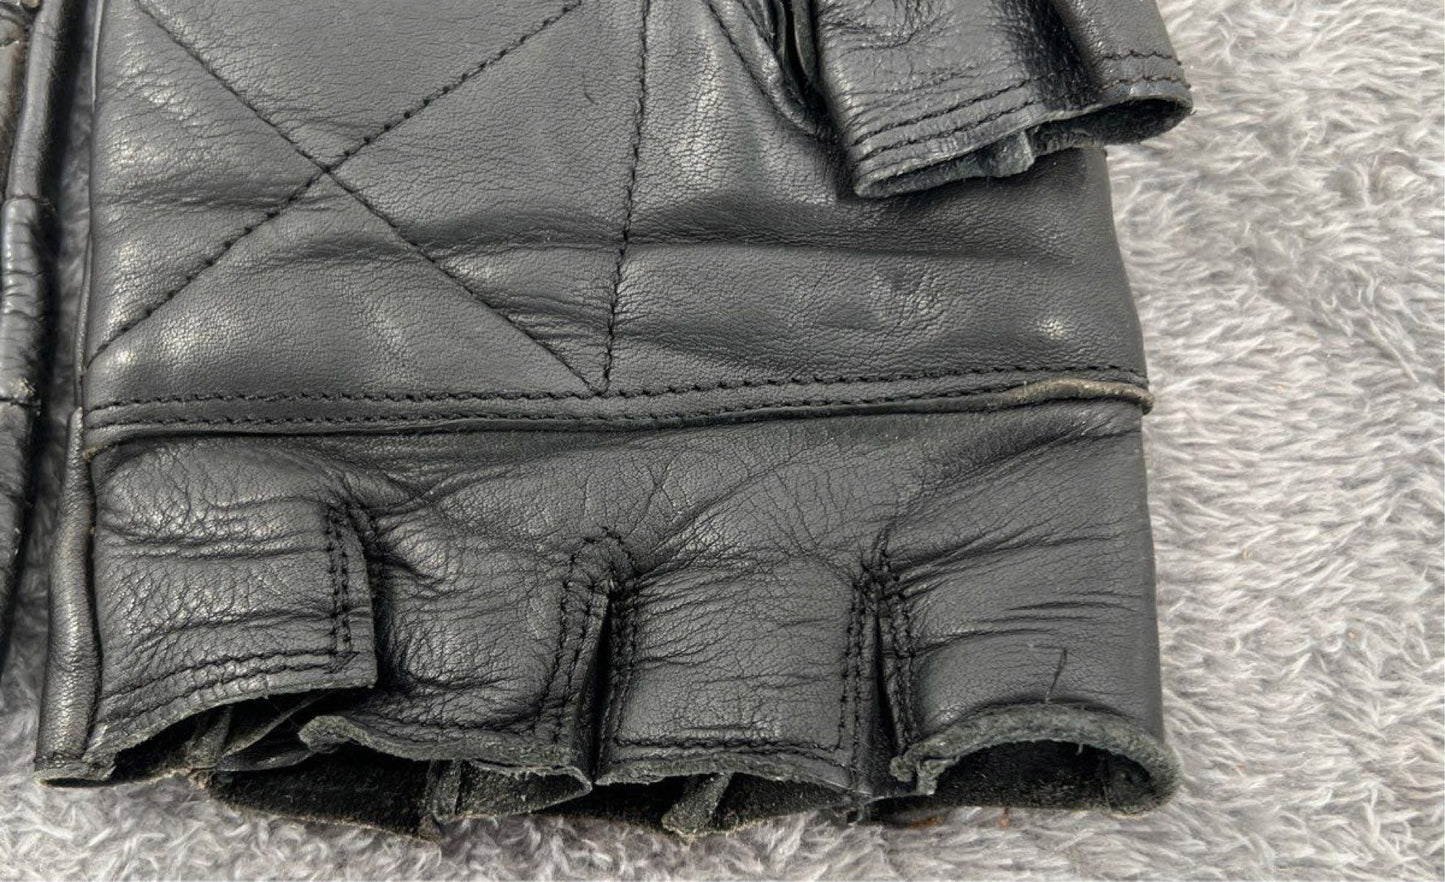 Harley Davidson Neck Cover & Men's Size L Fingerless Leather Motorcycle Gloves